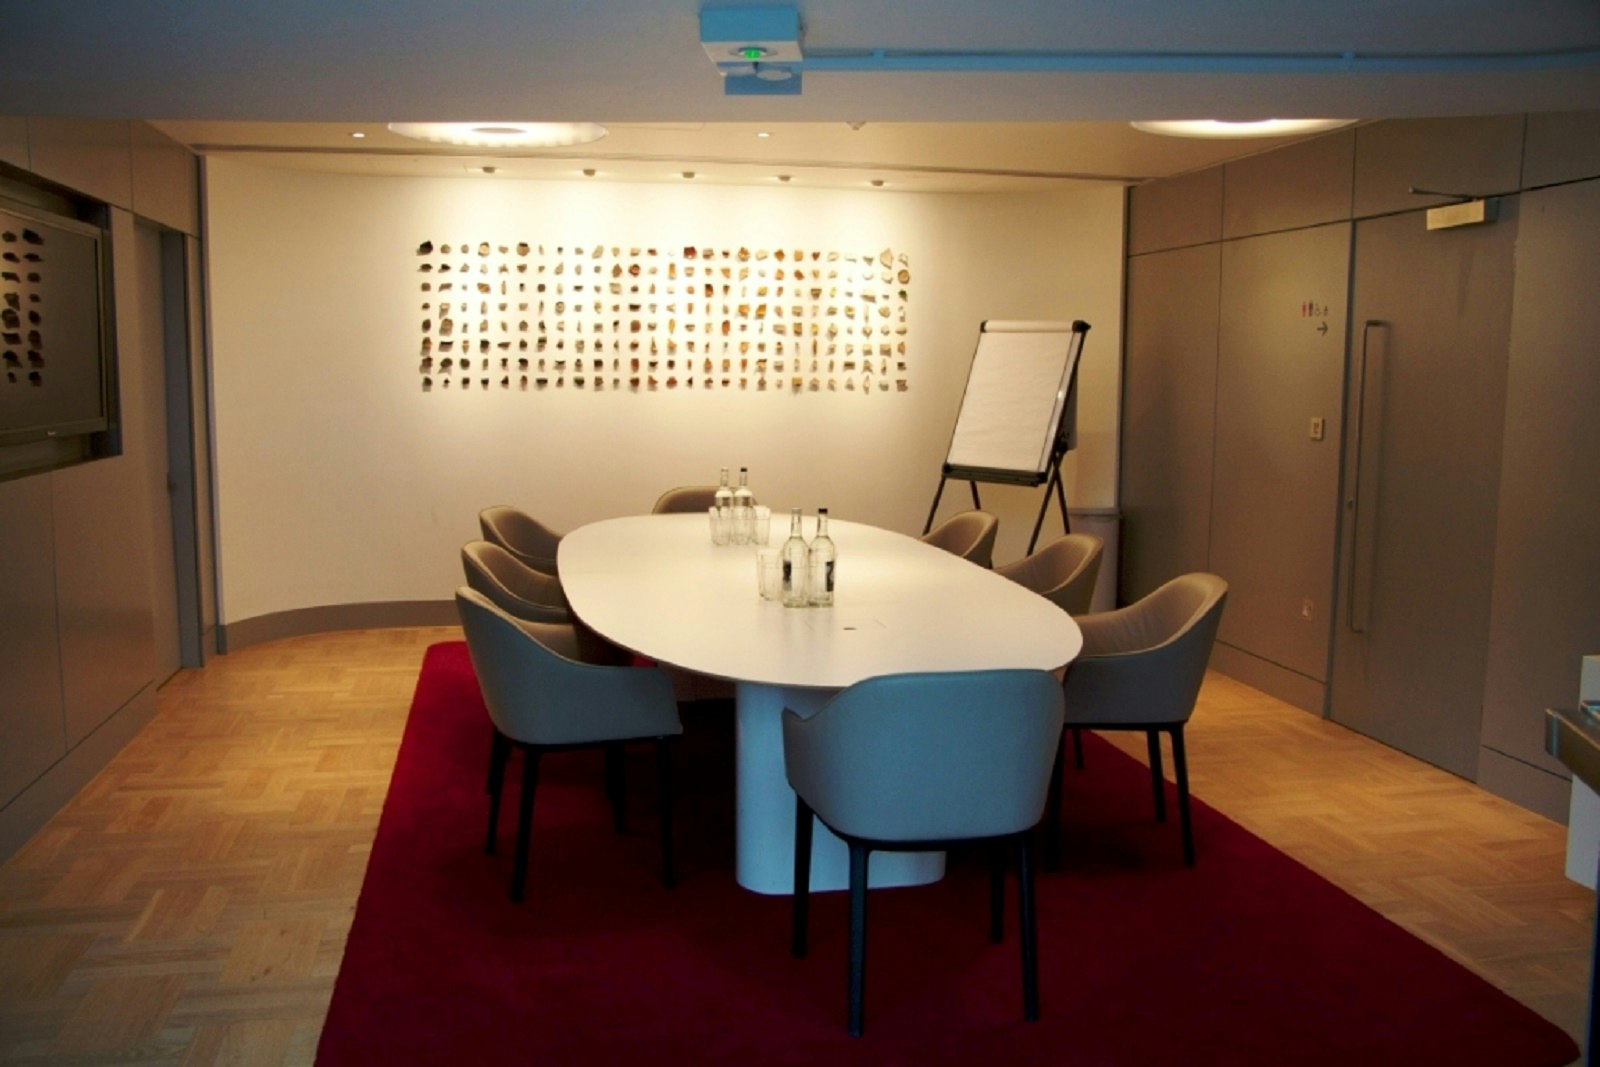 Meeting Rooms Venues in South London - Museum of London